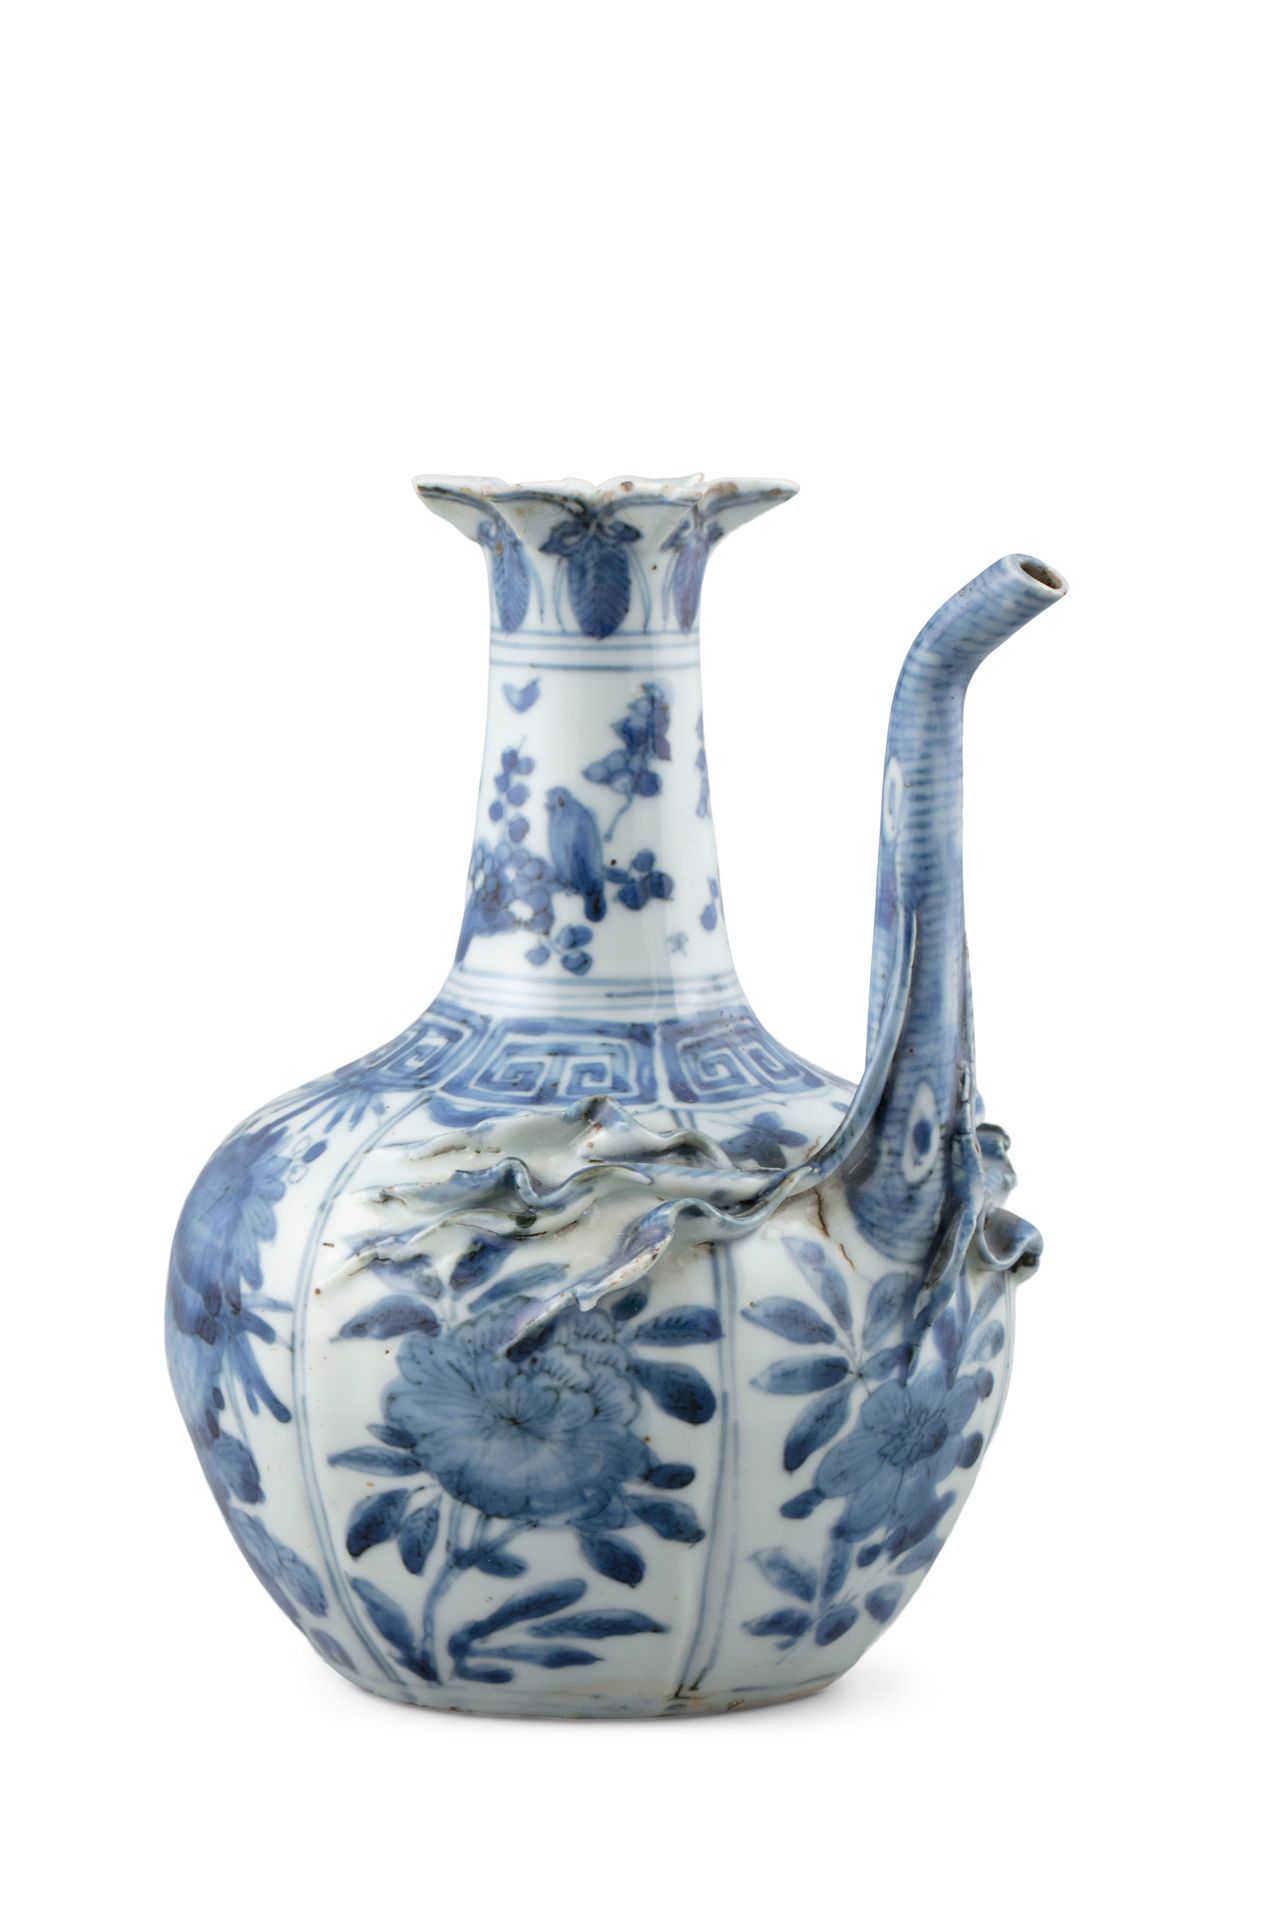 Null 一个蓝白瓷 "POMEGRANATE "水壶，建迪中国，万历时期 釉下钴蓝装饰的面板上有花朵。壶嘴周围有叶子的浮雕设计。高：16厘米